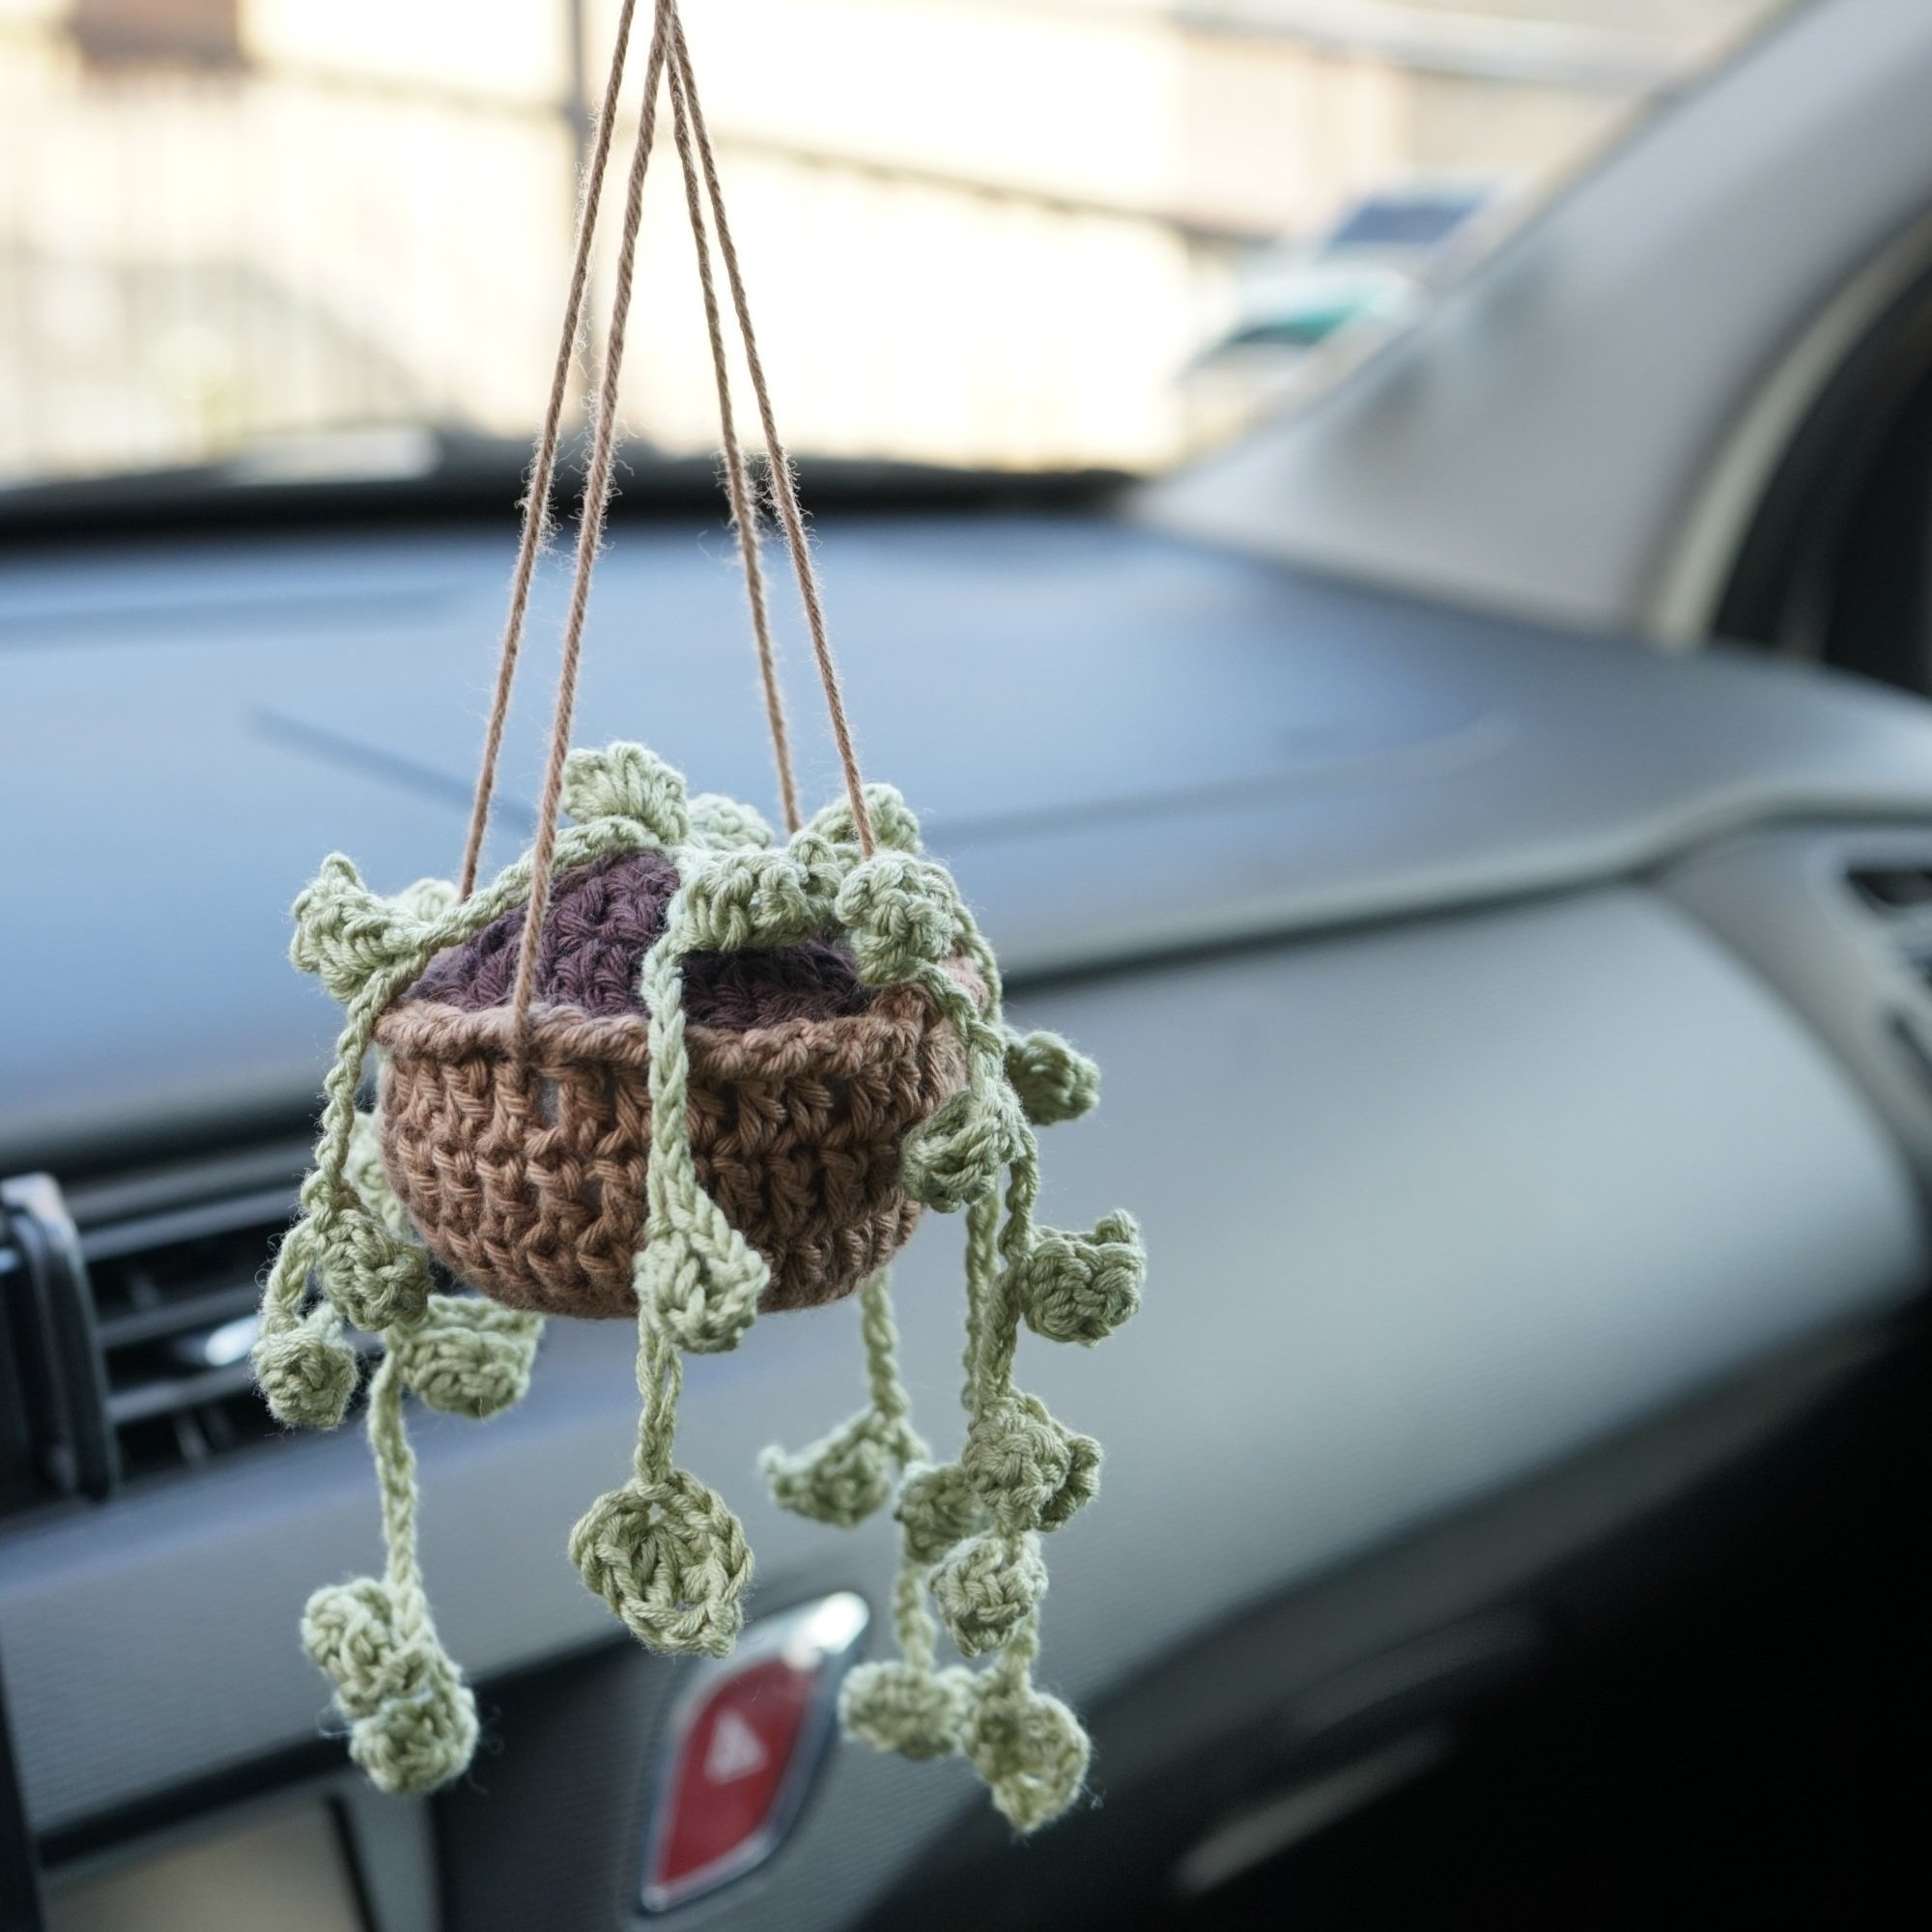 crochet+plant+hanging+car.jpg